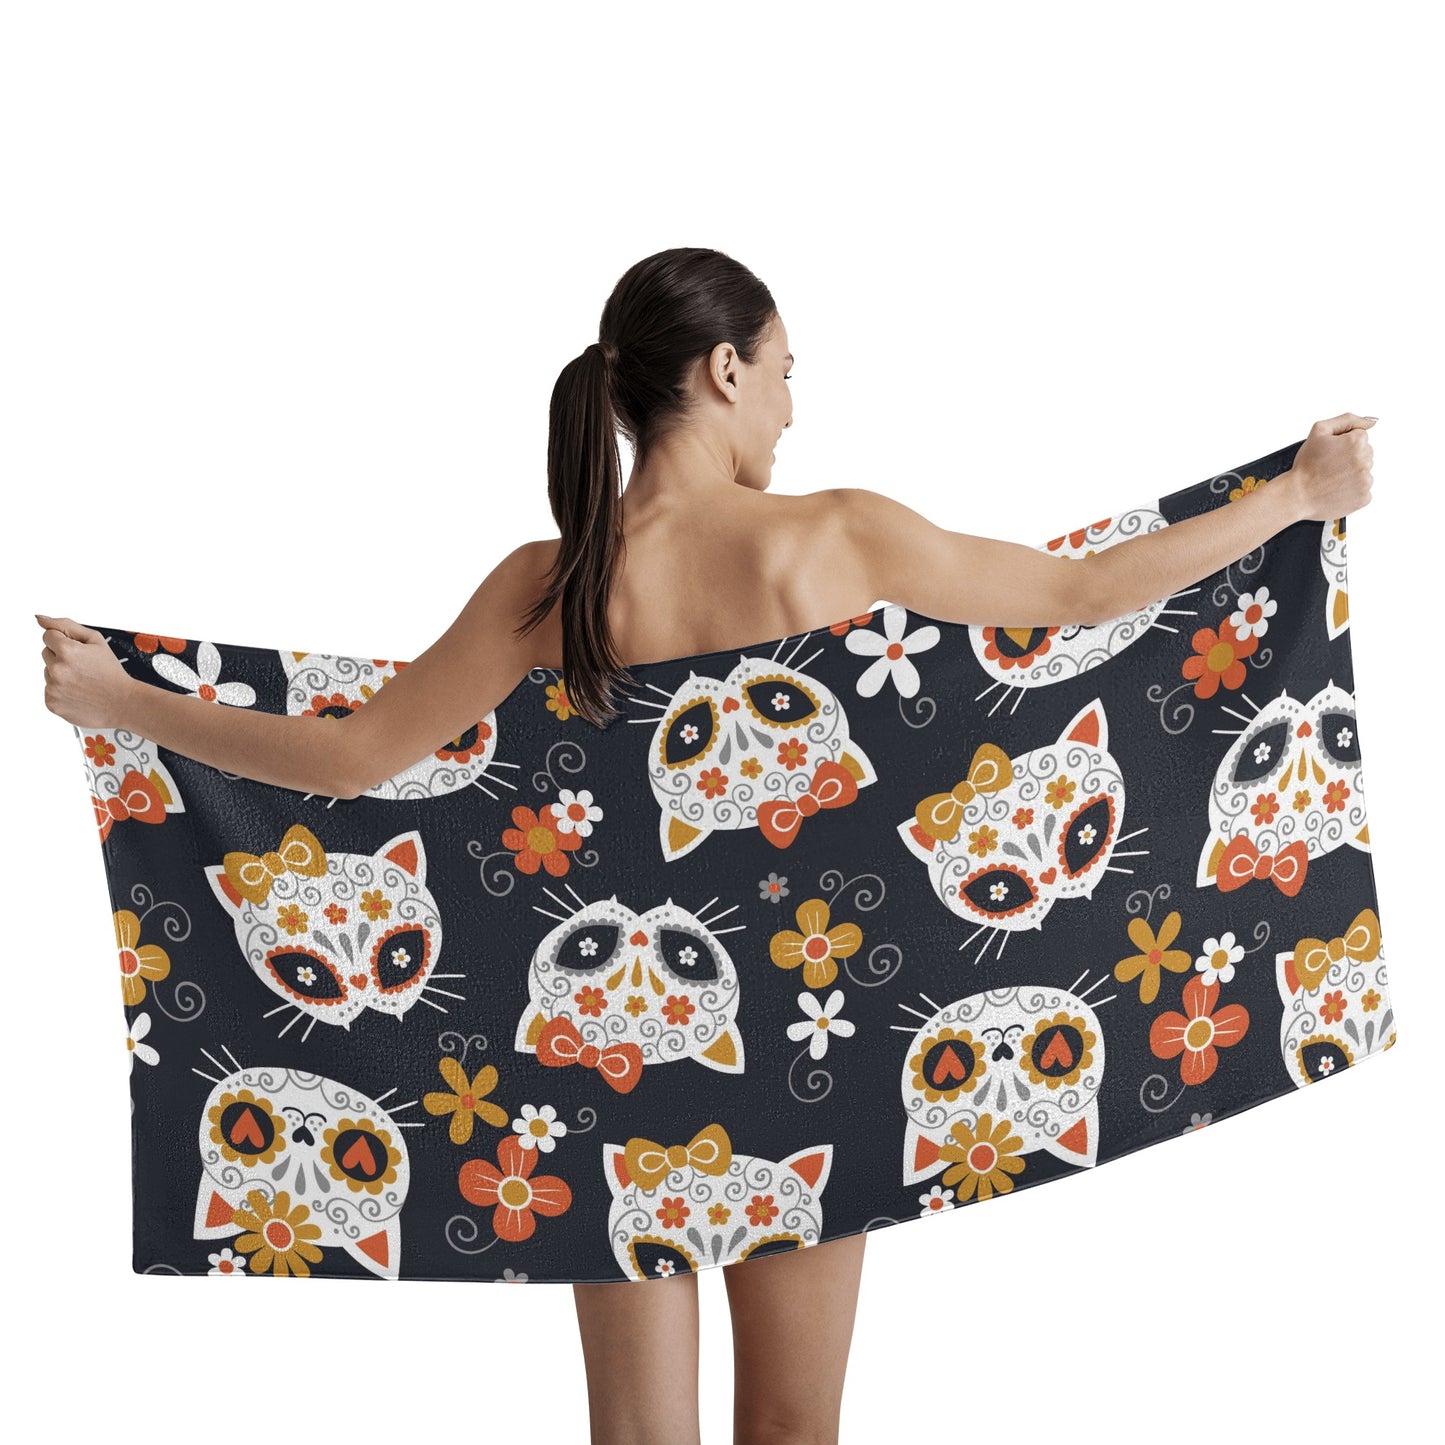 Sugar skull cat pattern Bath Towel